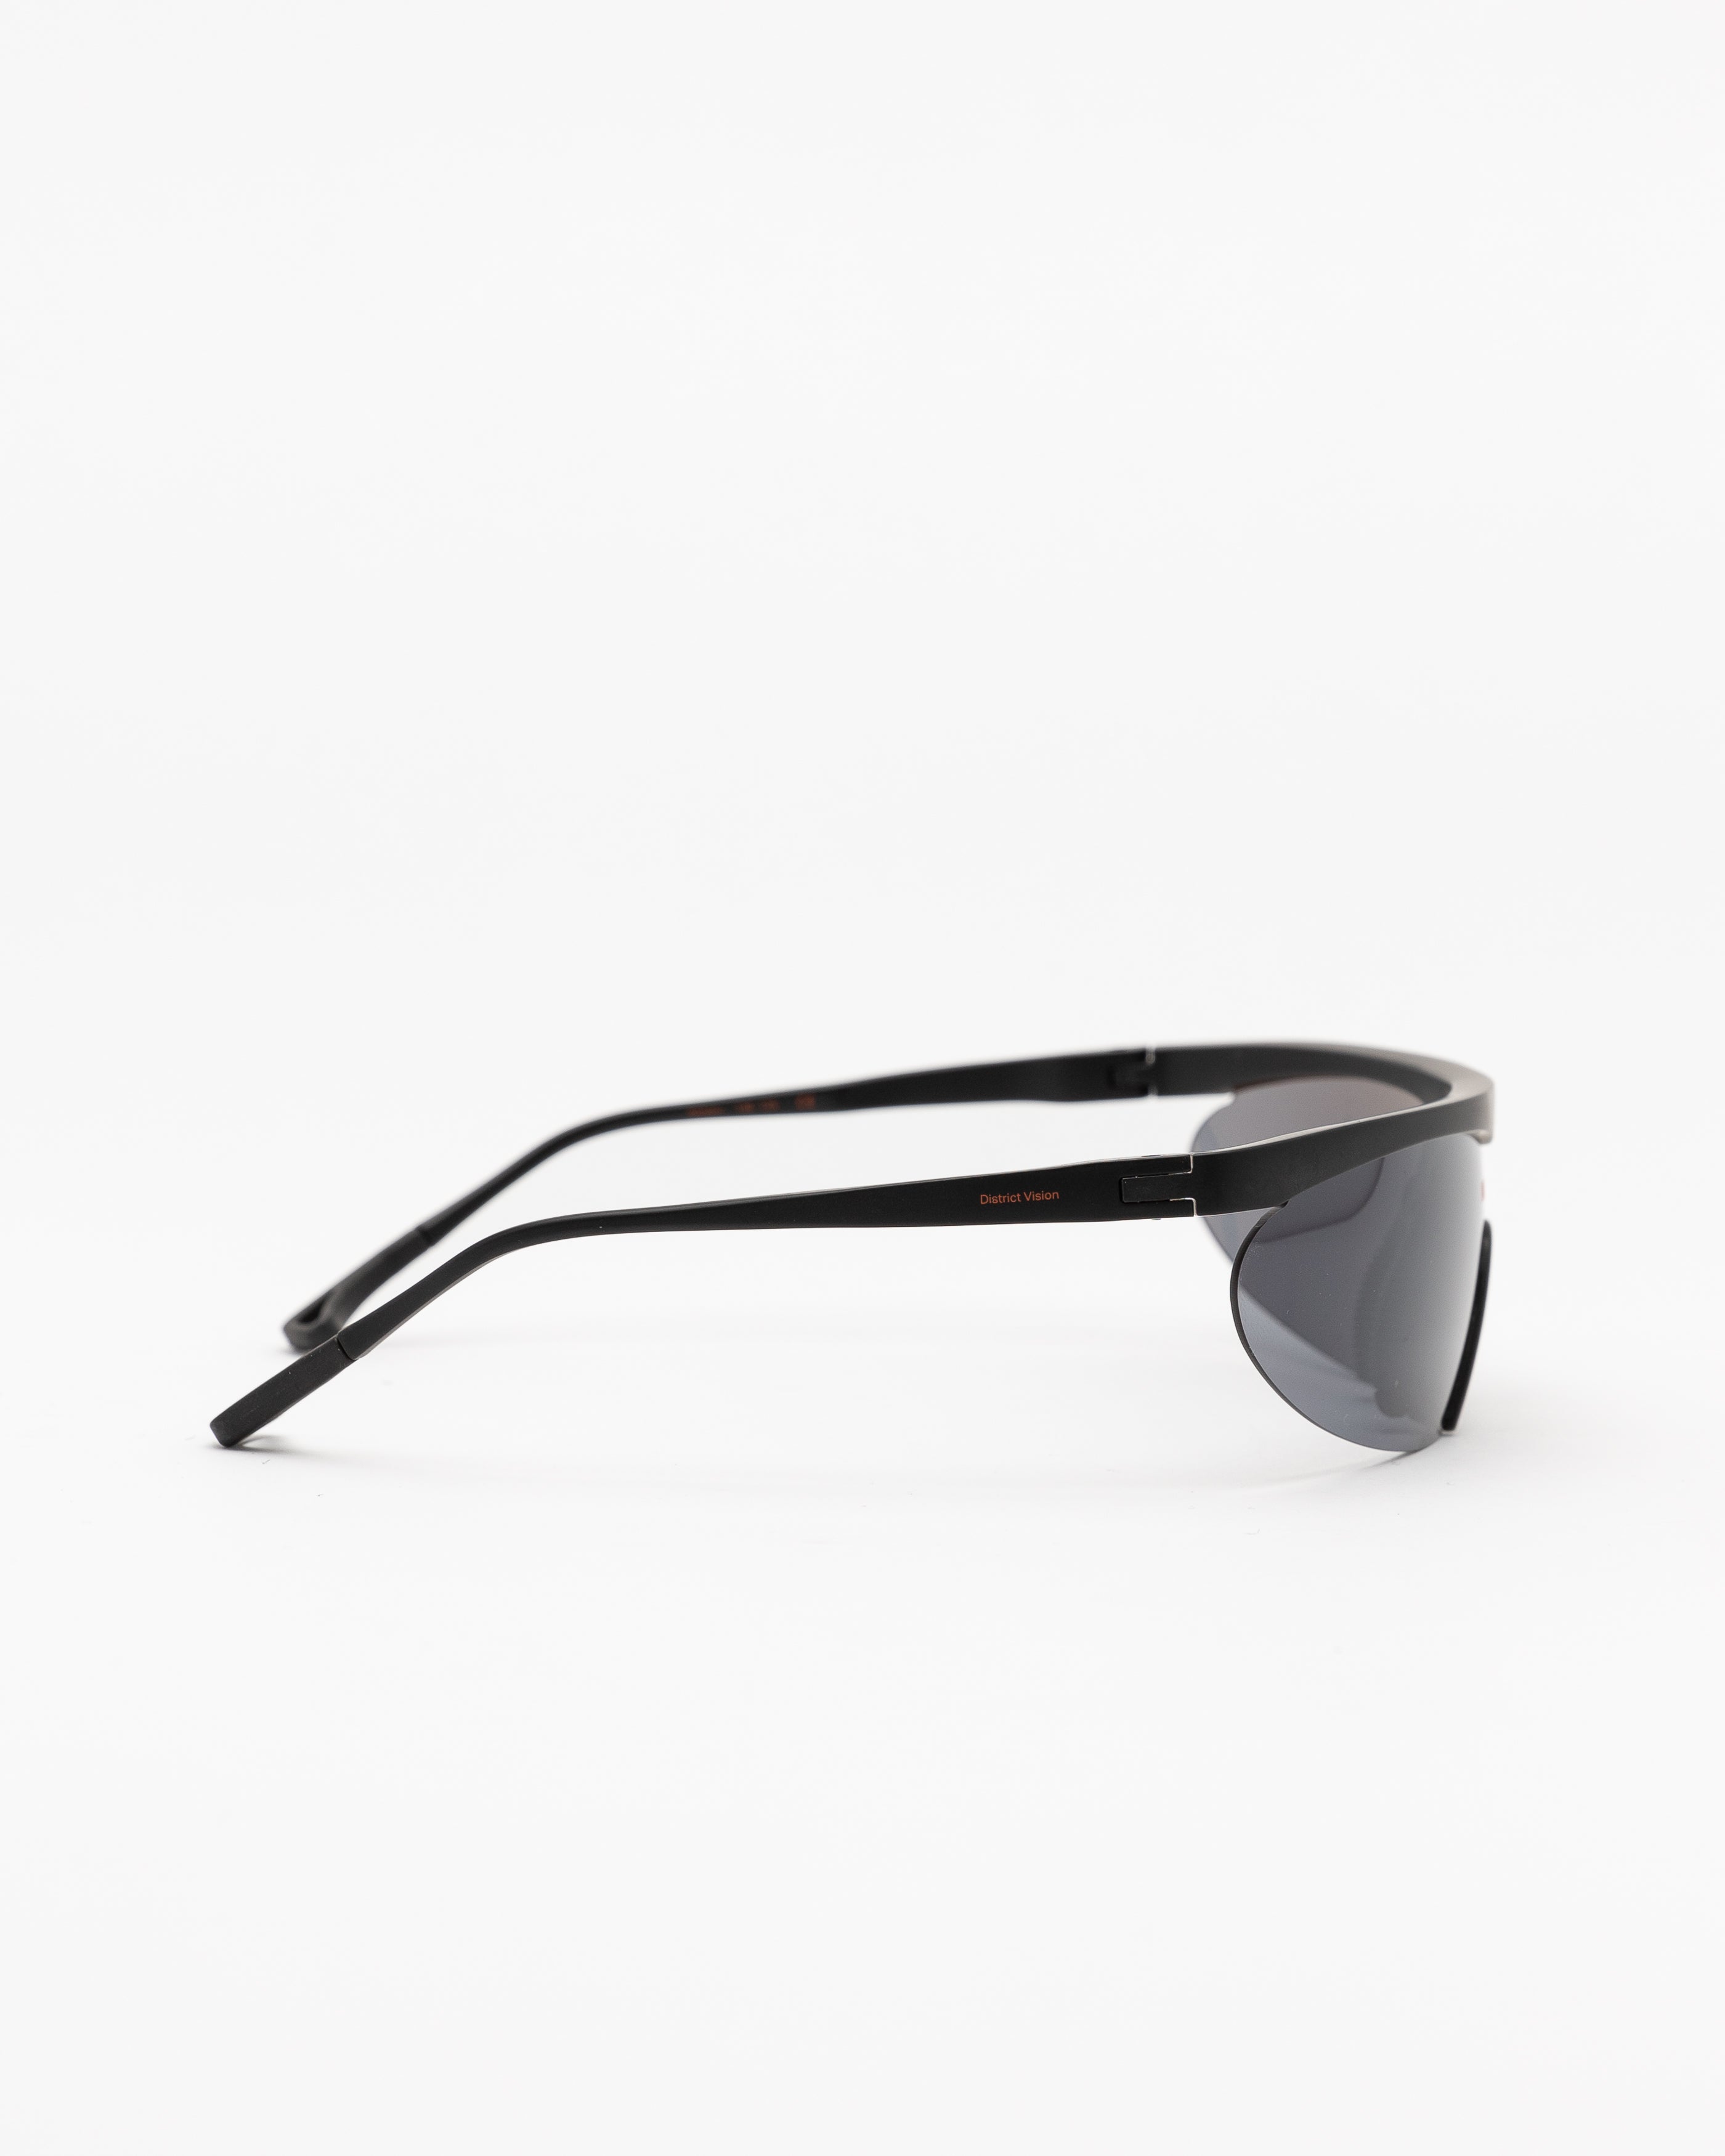 Koharu Sunglasses Eclipse in Black Mirror